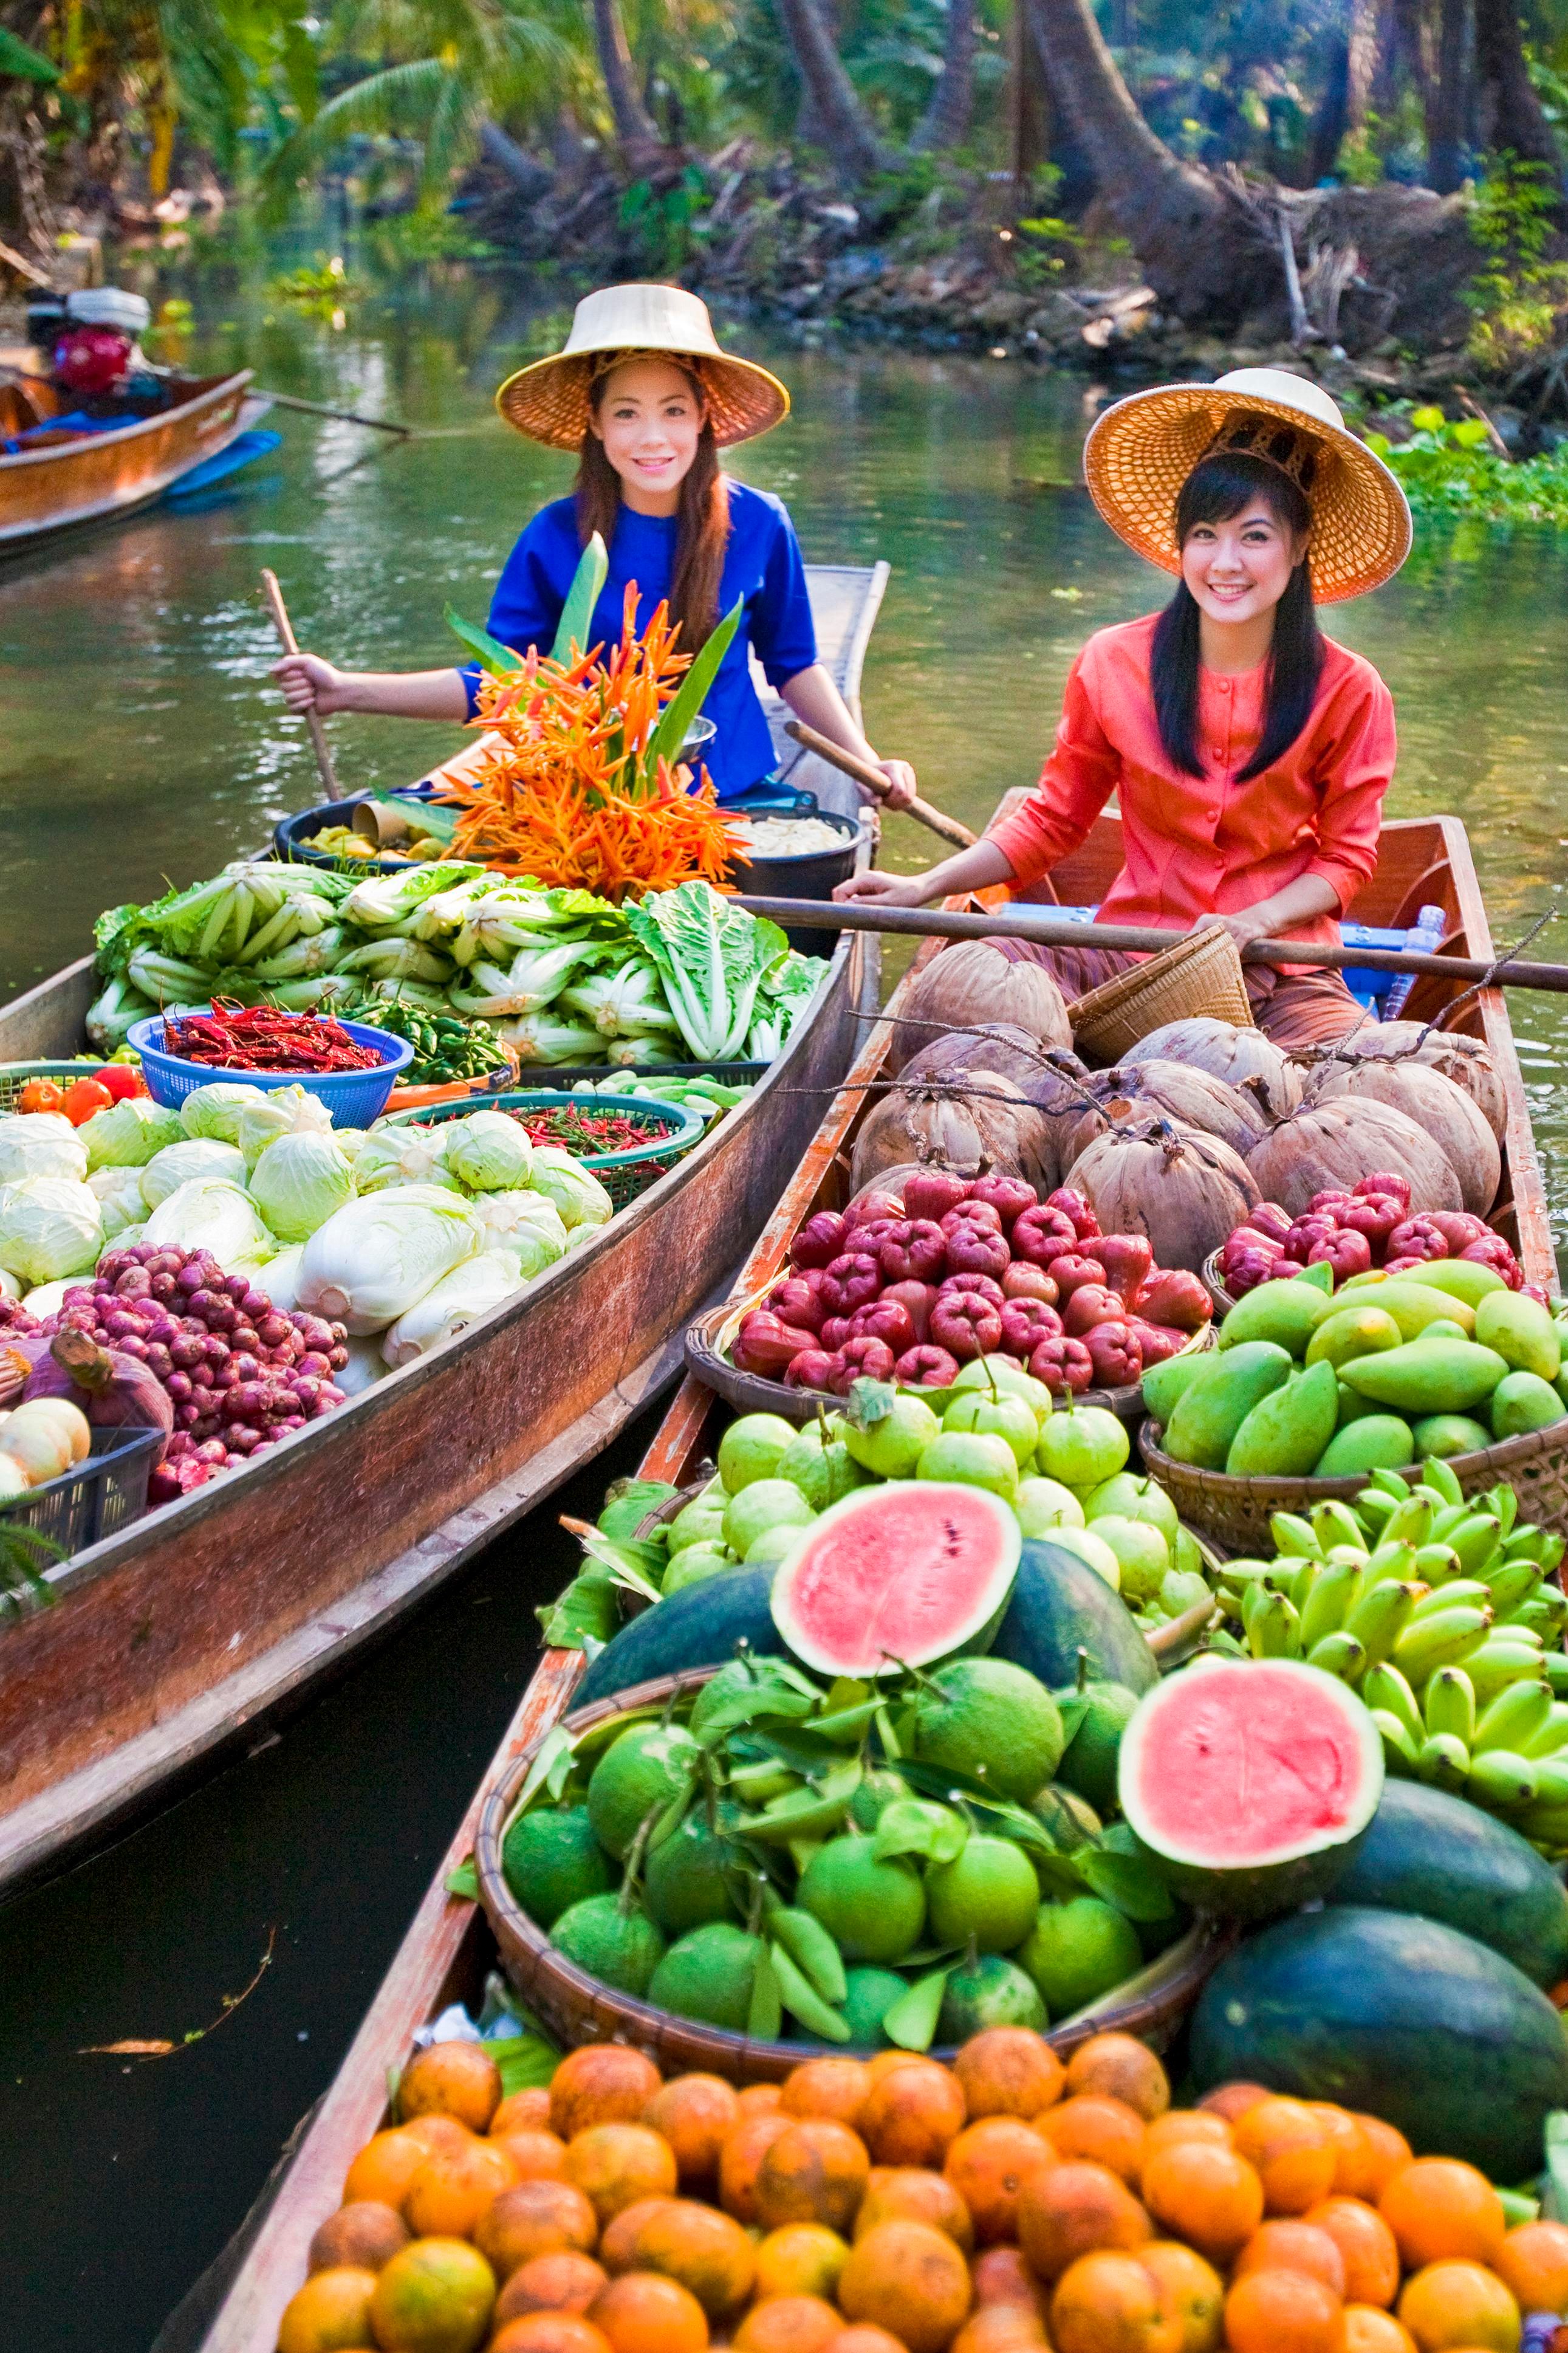 Photo courtesy of the Tourism Authority of Thailand 